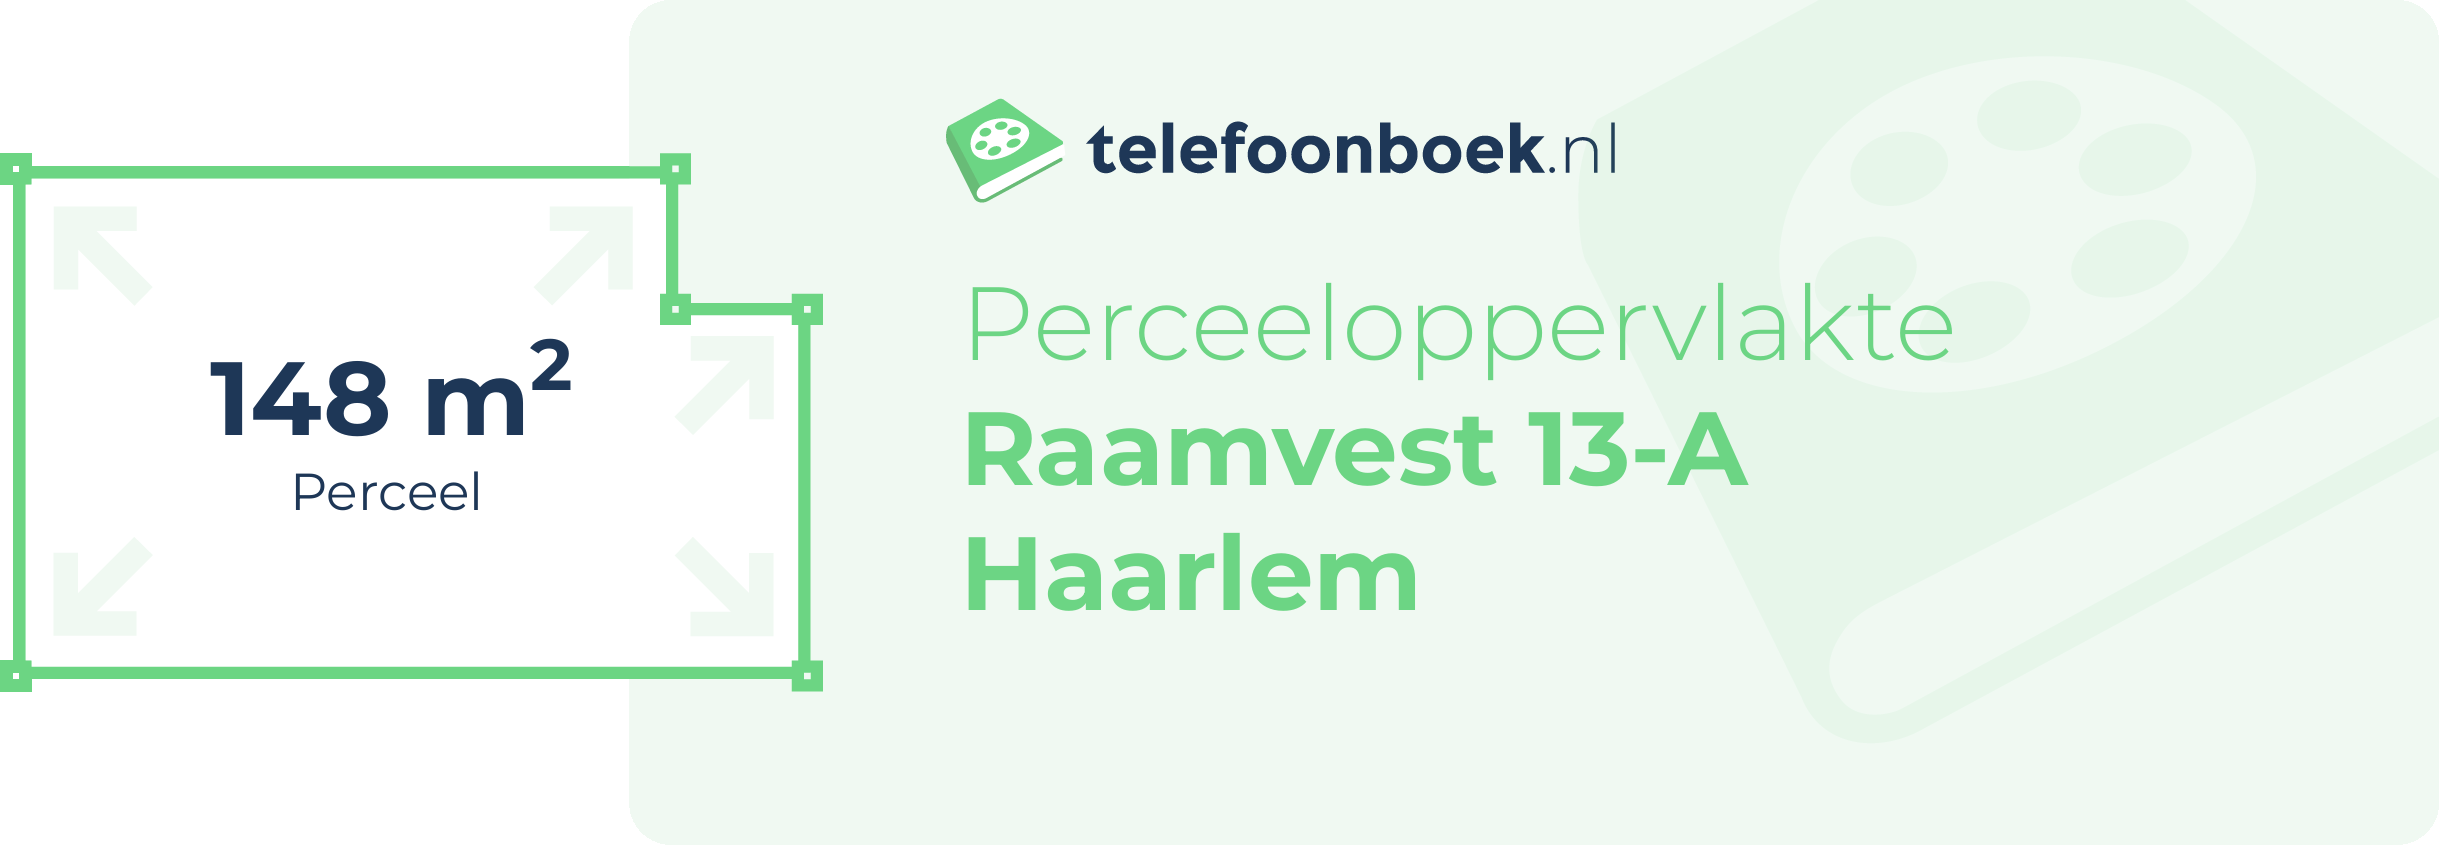 Perceeloppervlakte Raamvest 13-A Haarlem